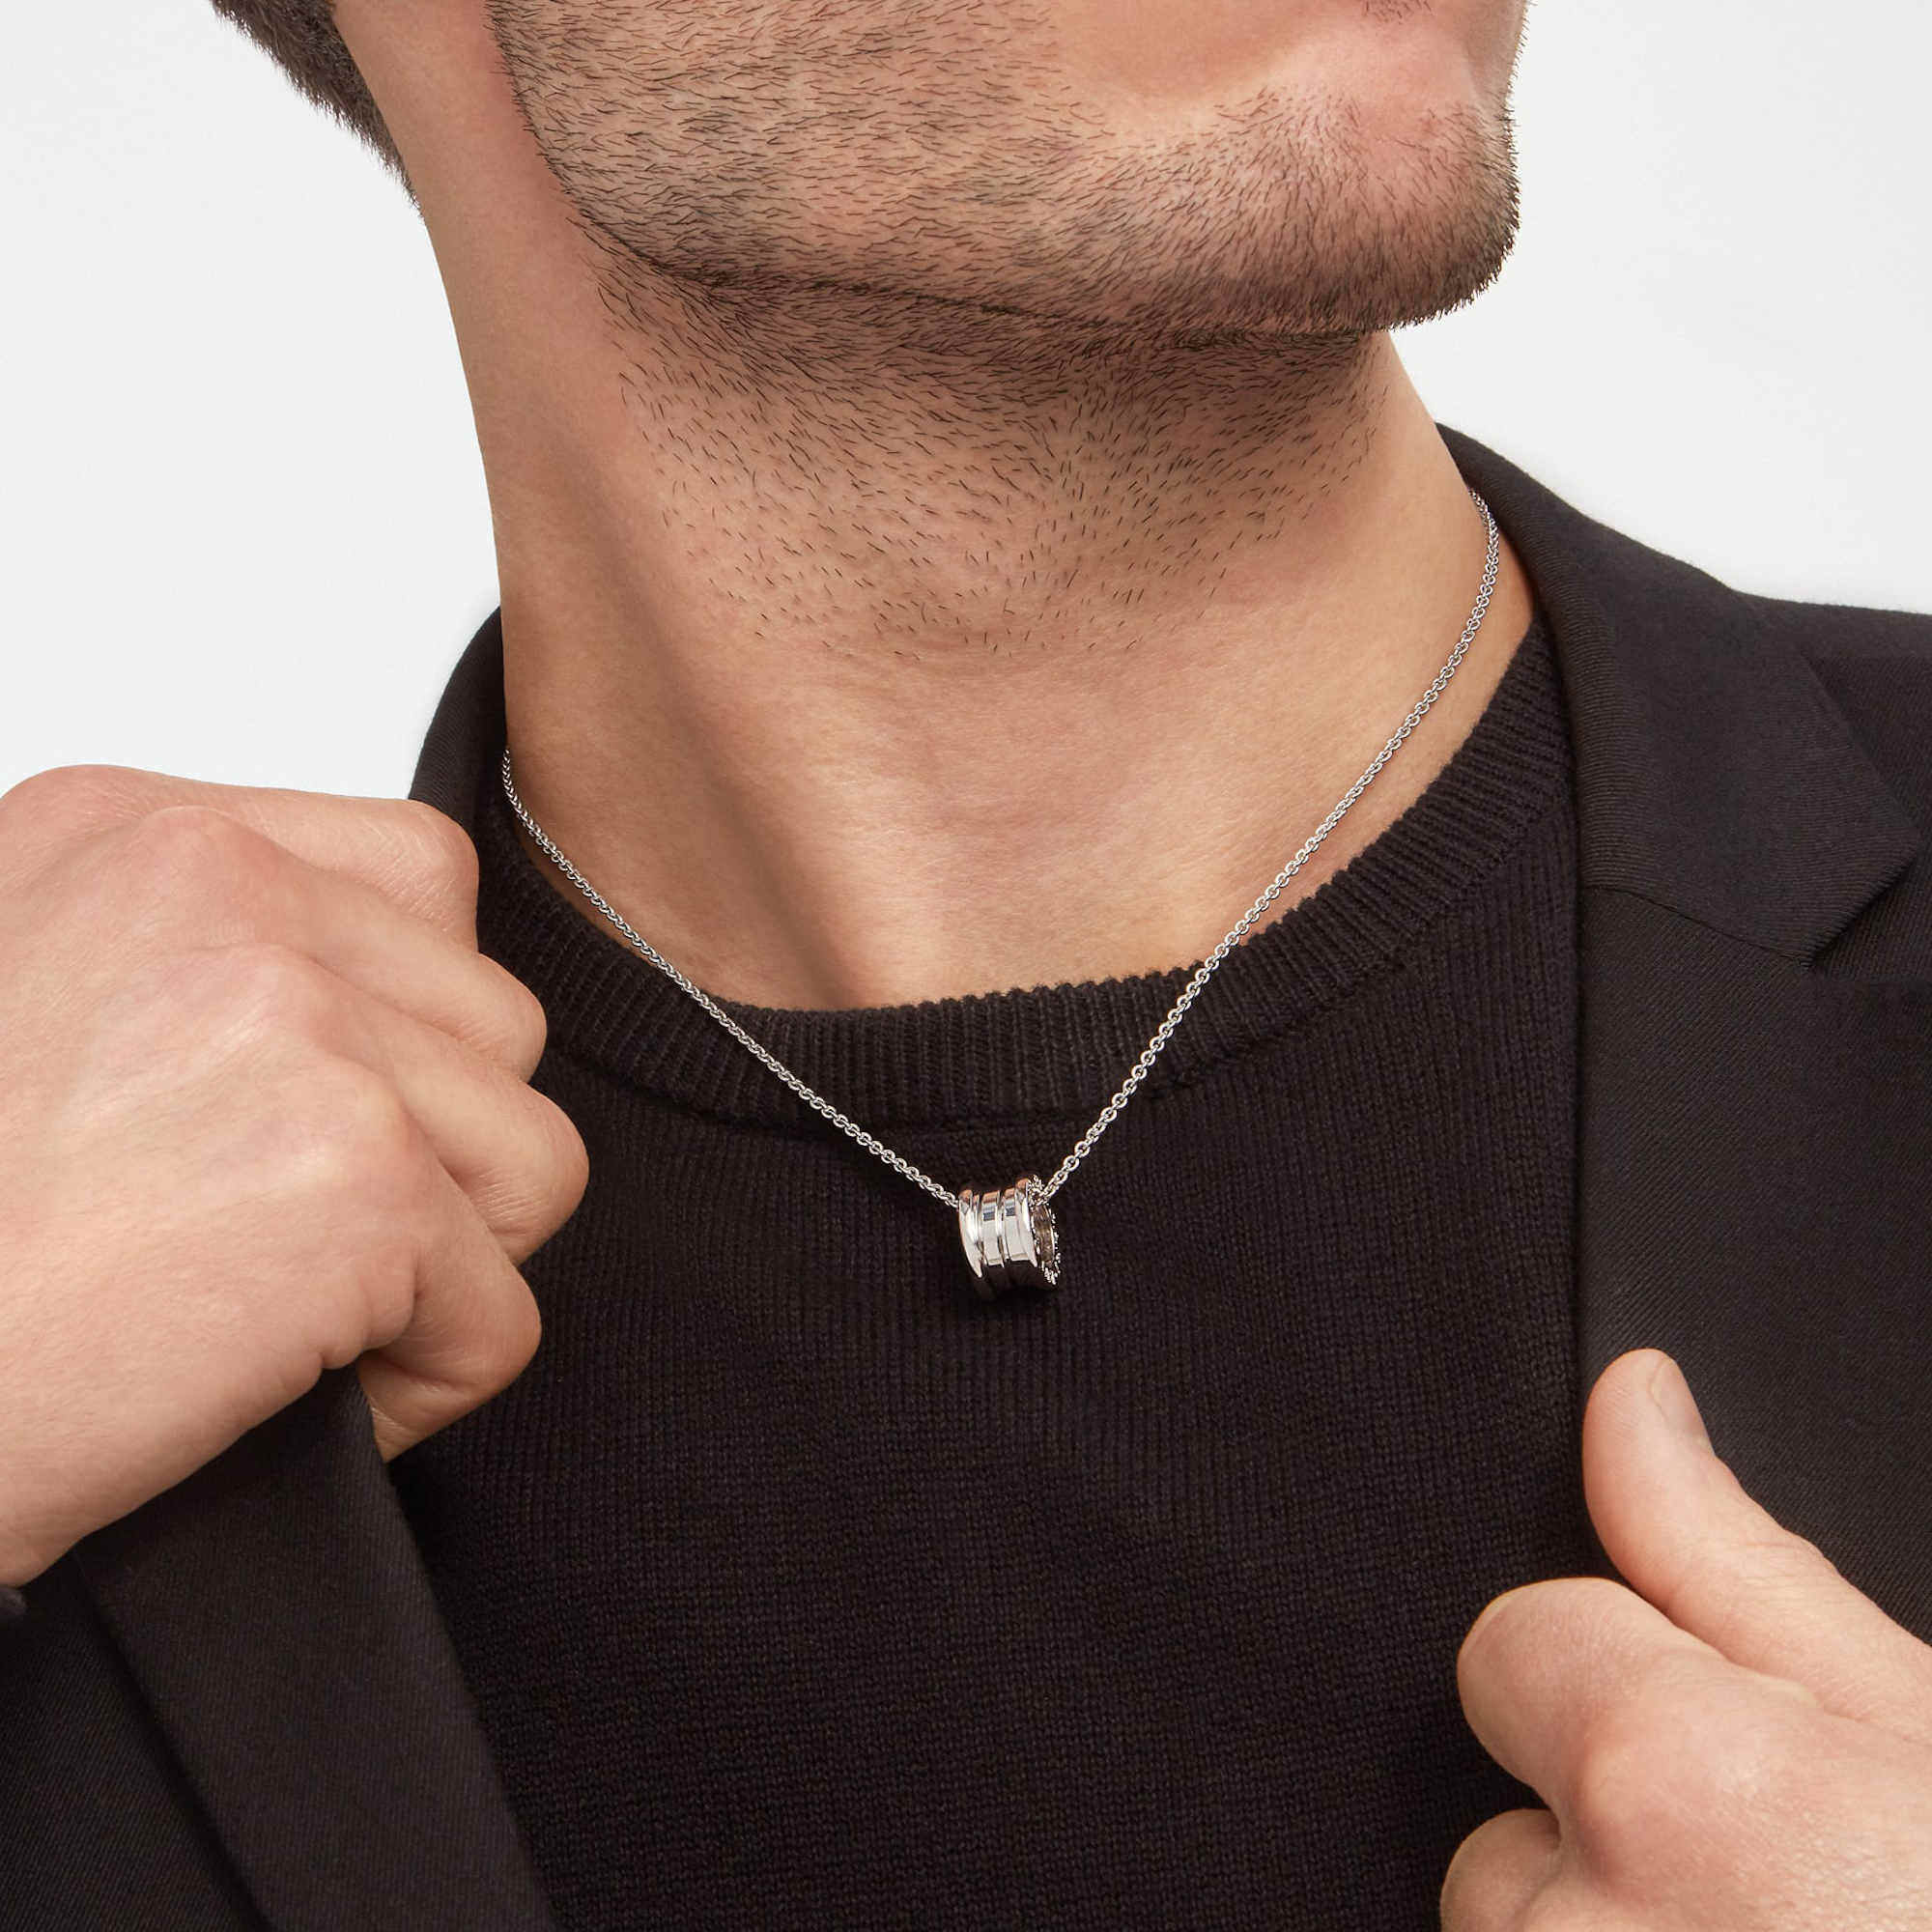 Bulgari’s B.ZERO1 necklace is popular jewellery item for men. Photo: Bulgari